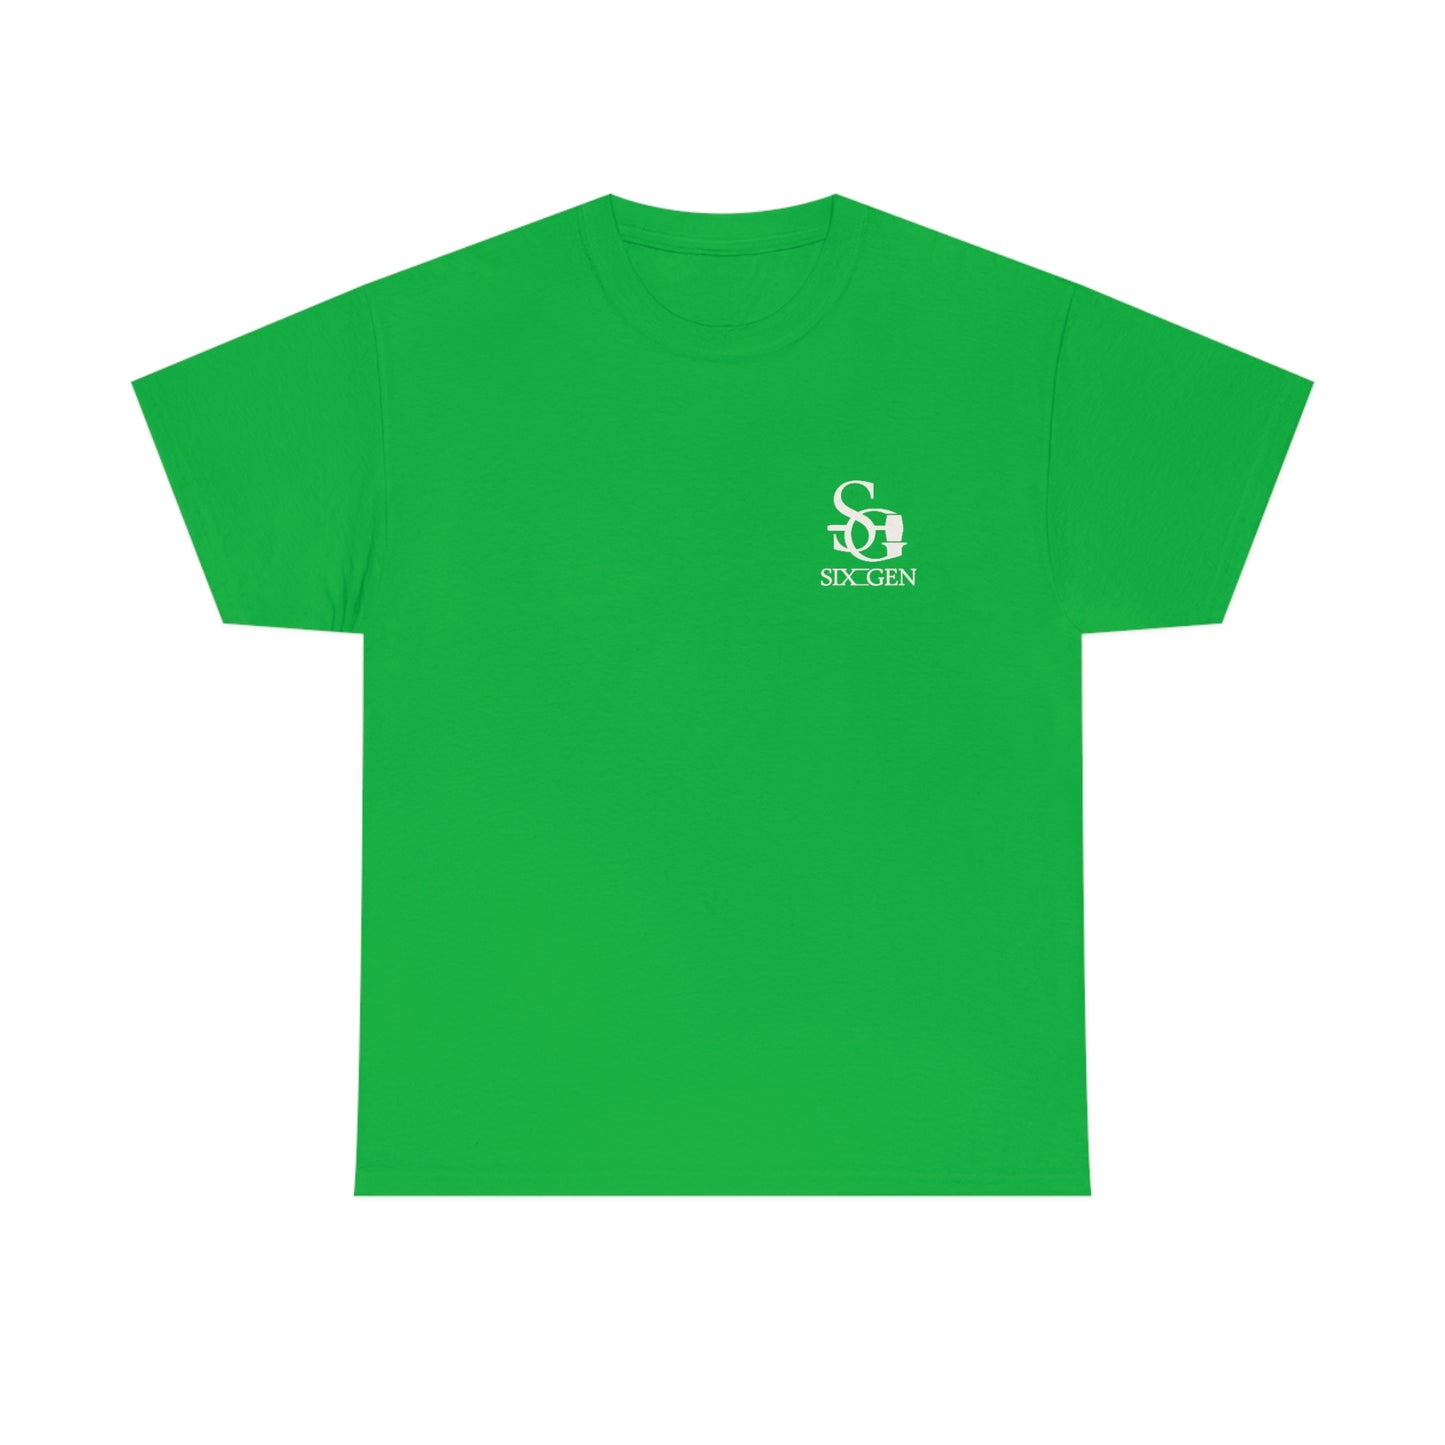 Six-Gen Forge logo cotton t shirt